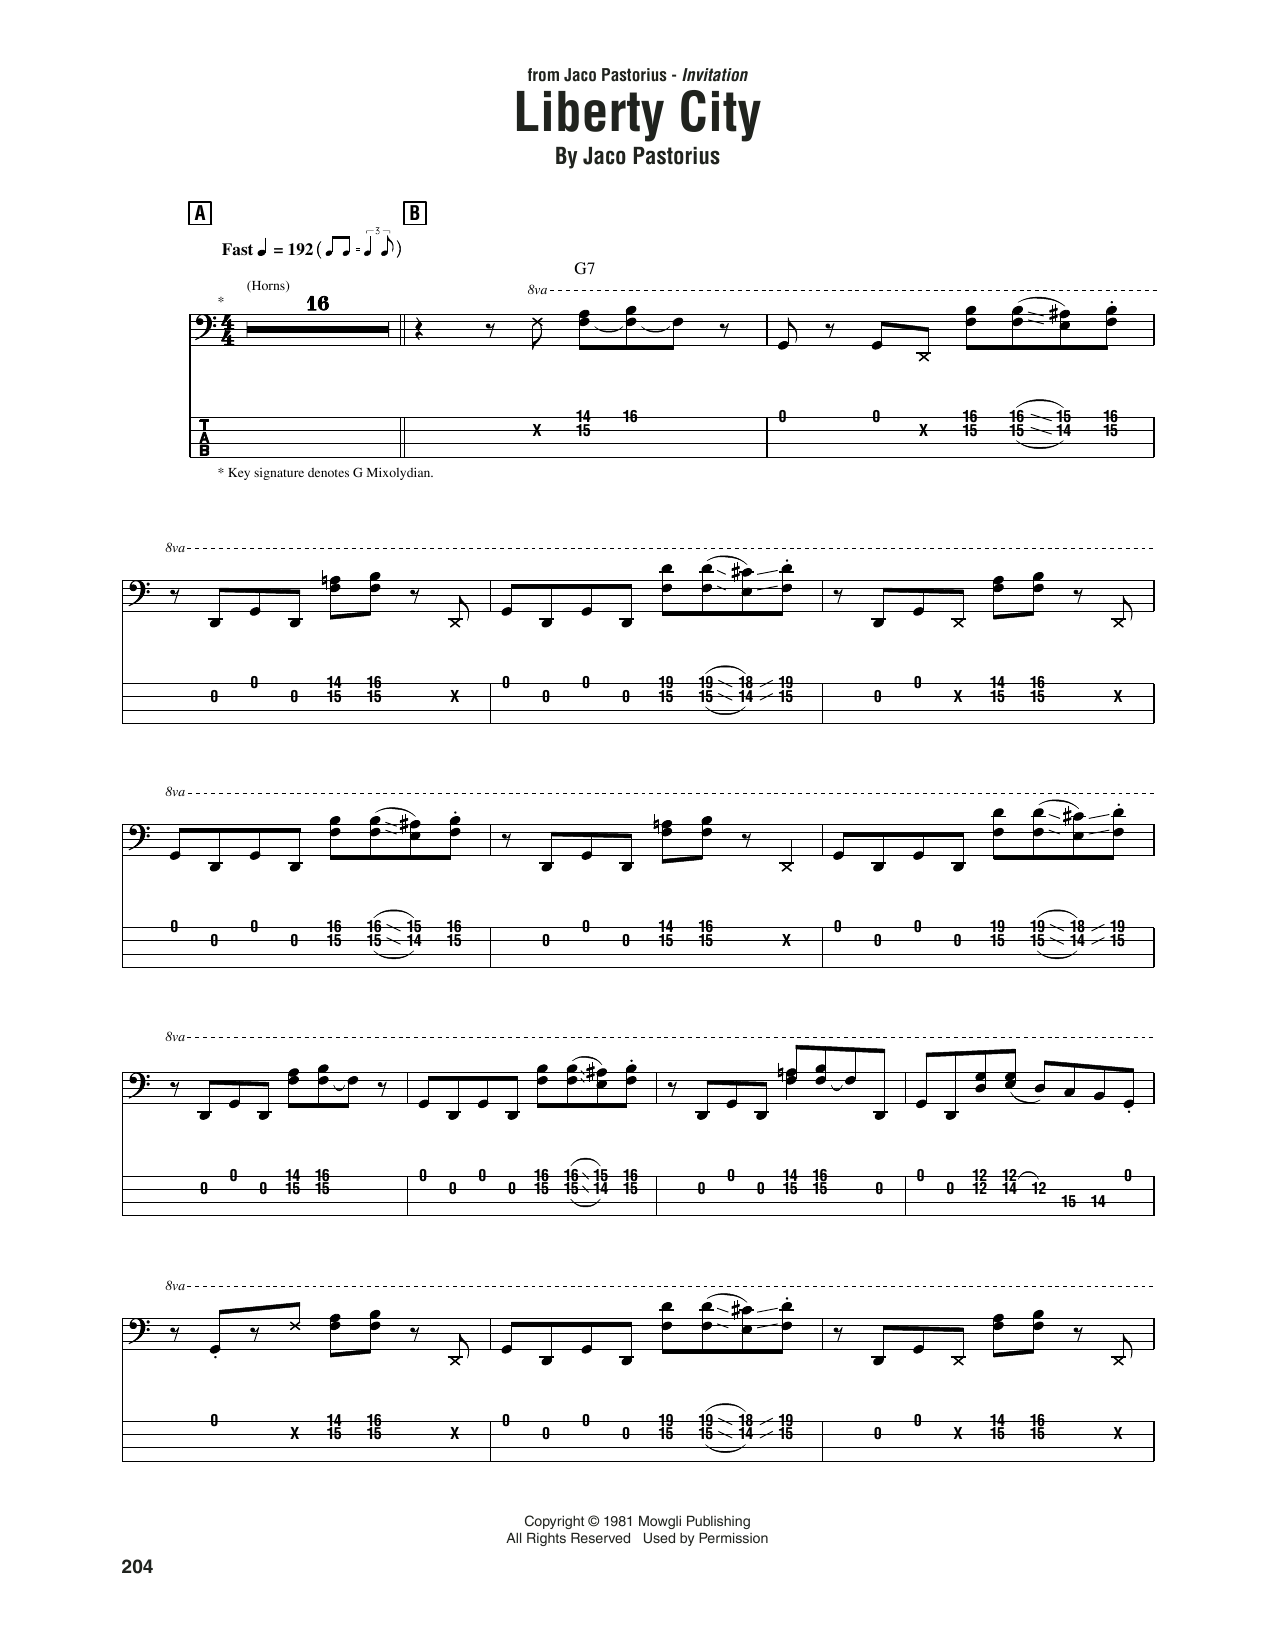 Jaco Pastorius Liberty City Sheet Music Notes & Chords for Bass Guitar Tab - Download or Print PDF